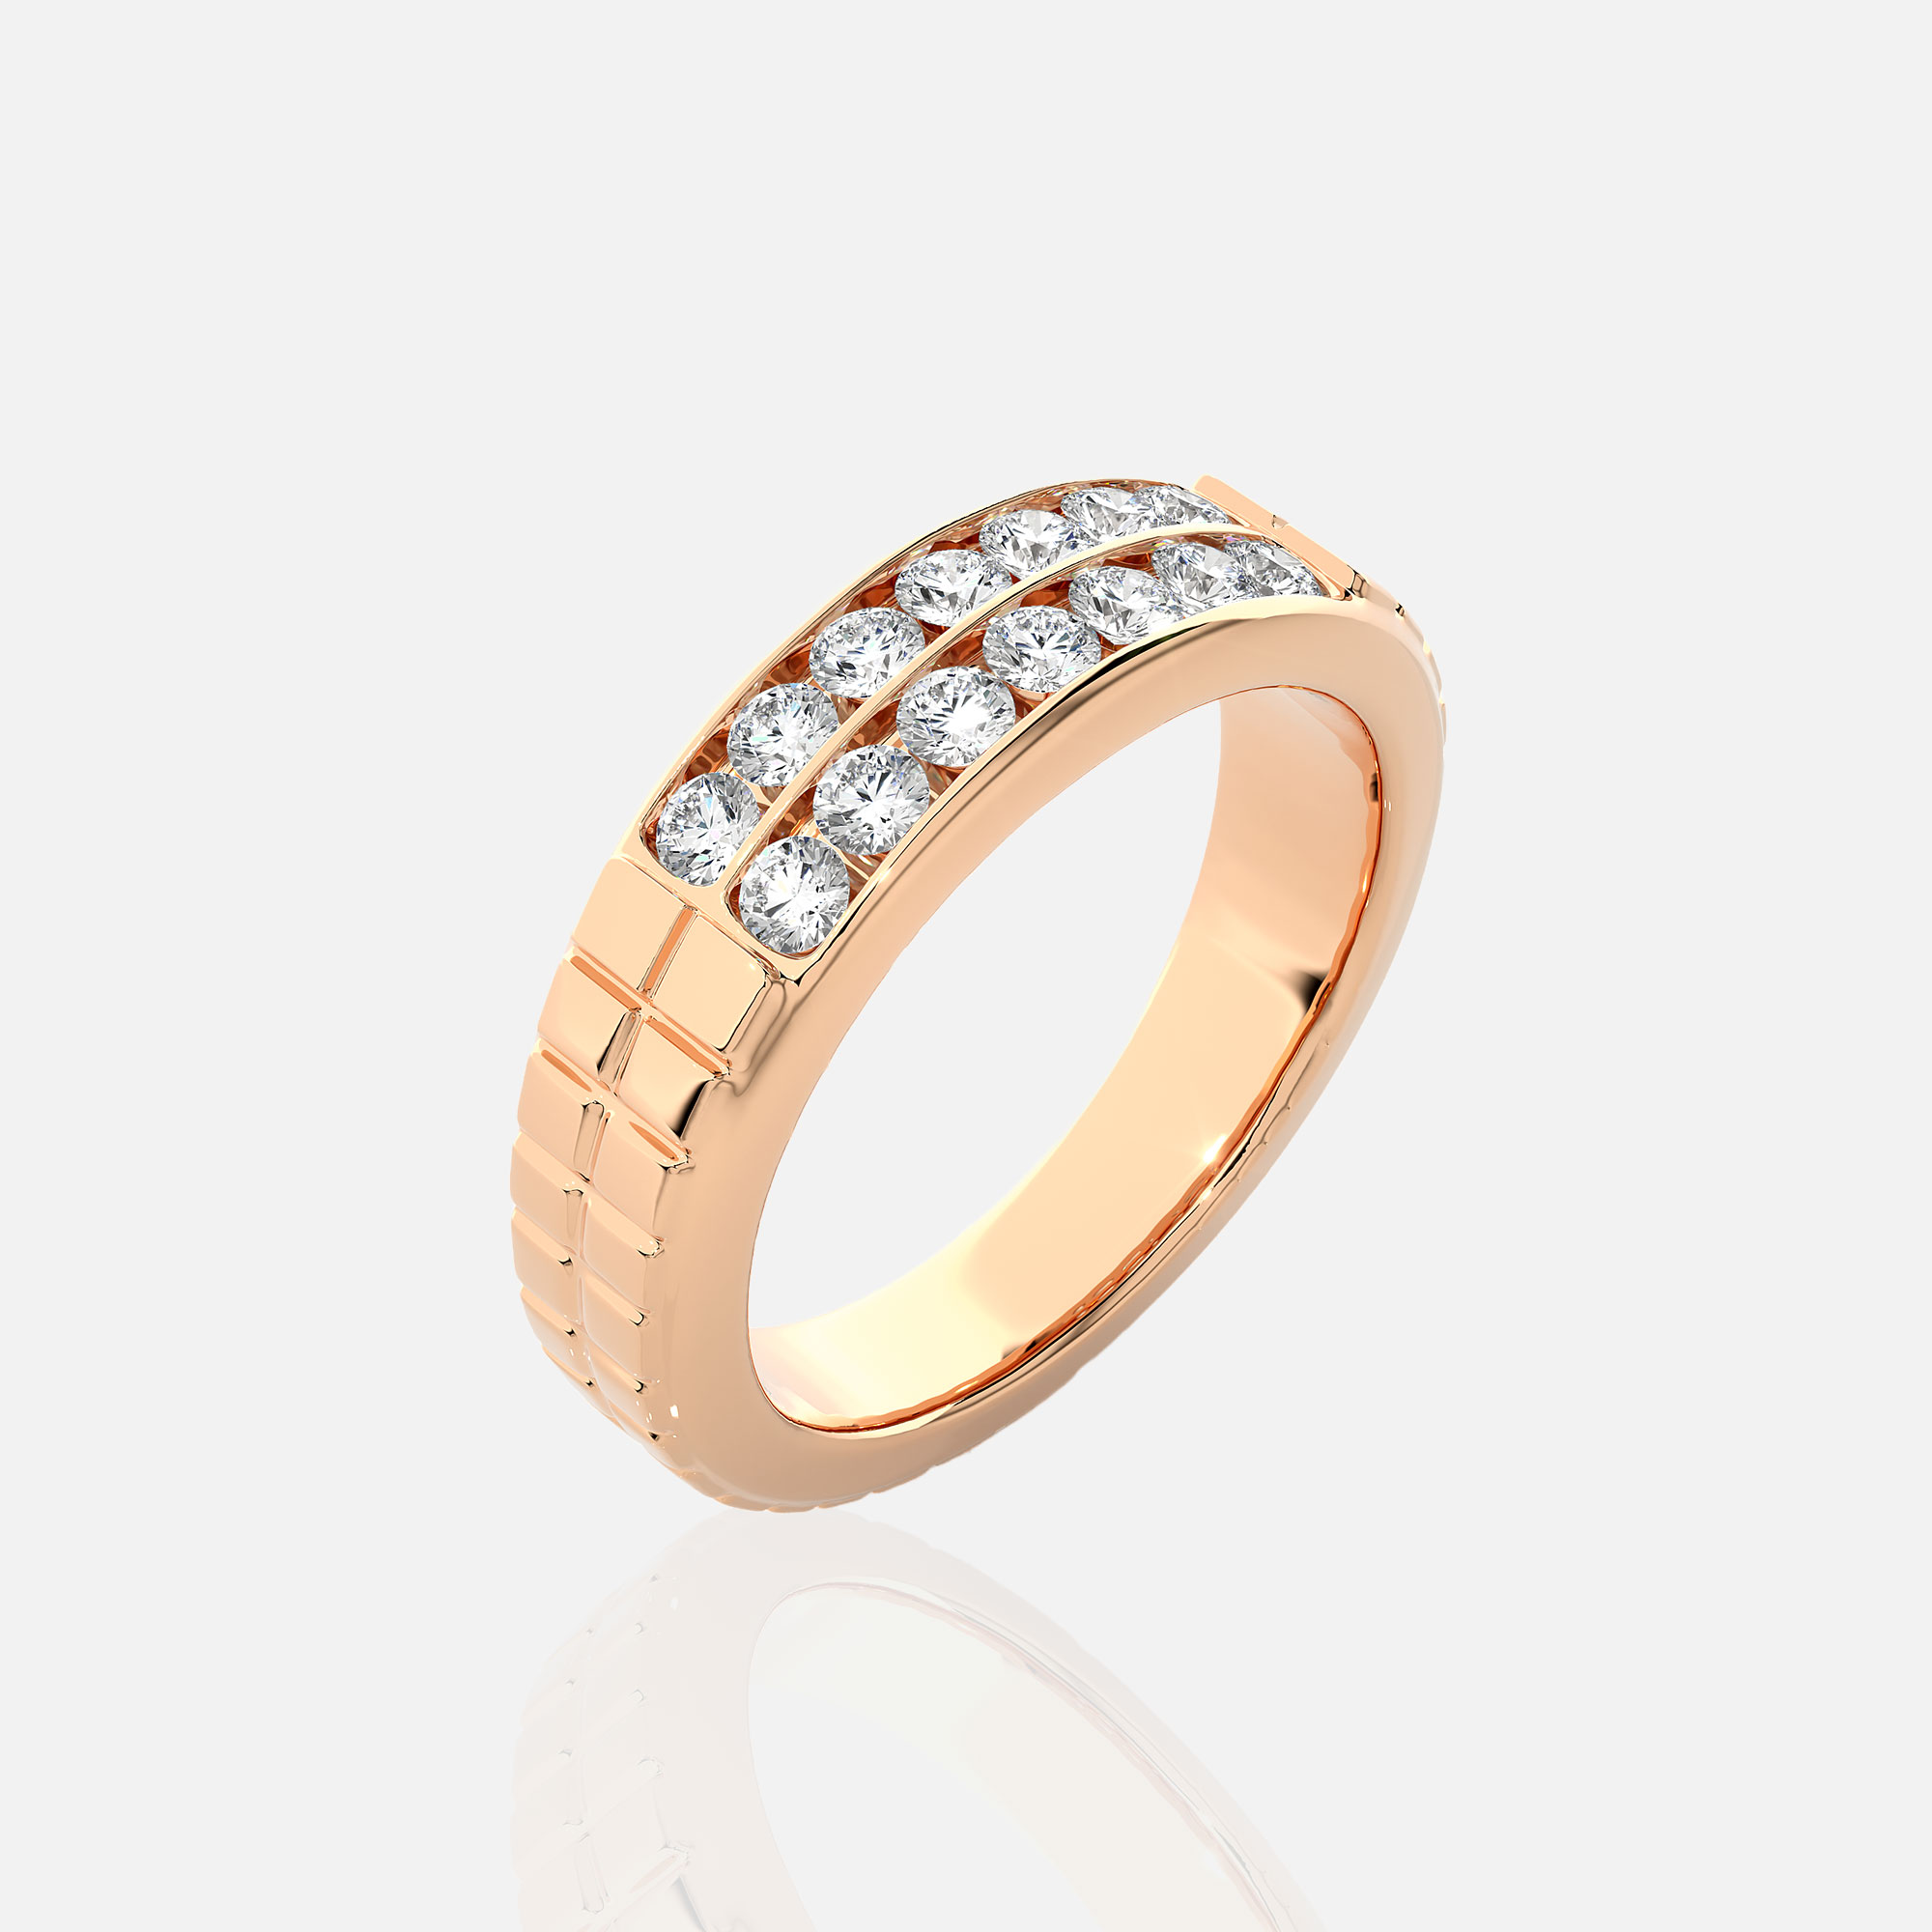 Men's Diamond Wedding Band Solid 10k Yellow Gold Ring 1/4 Ctw. (.25 Ctw.) -  Size 8 | Amazon.com